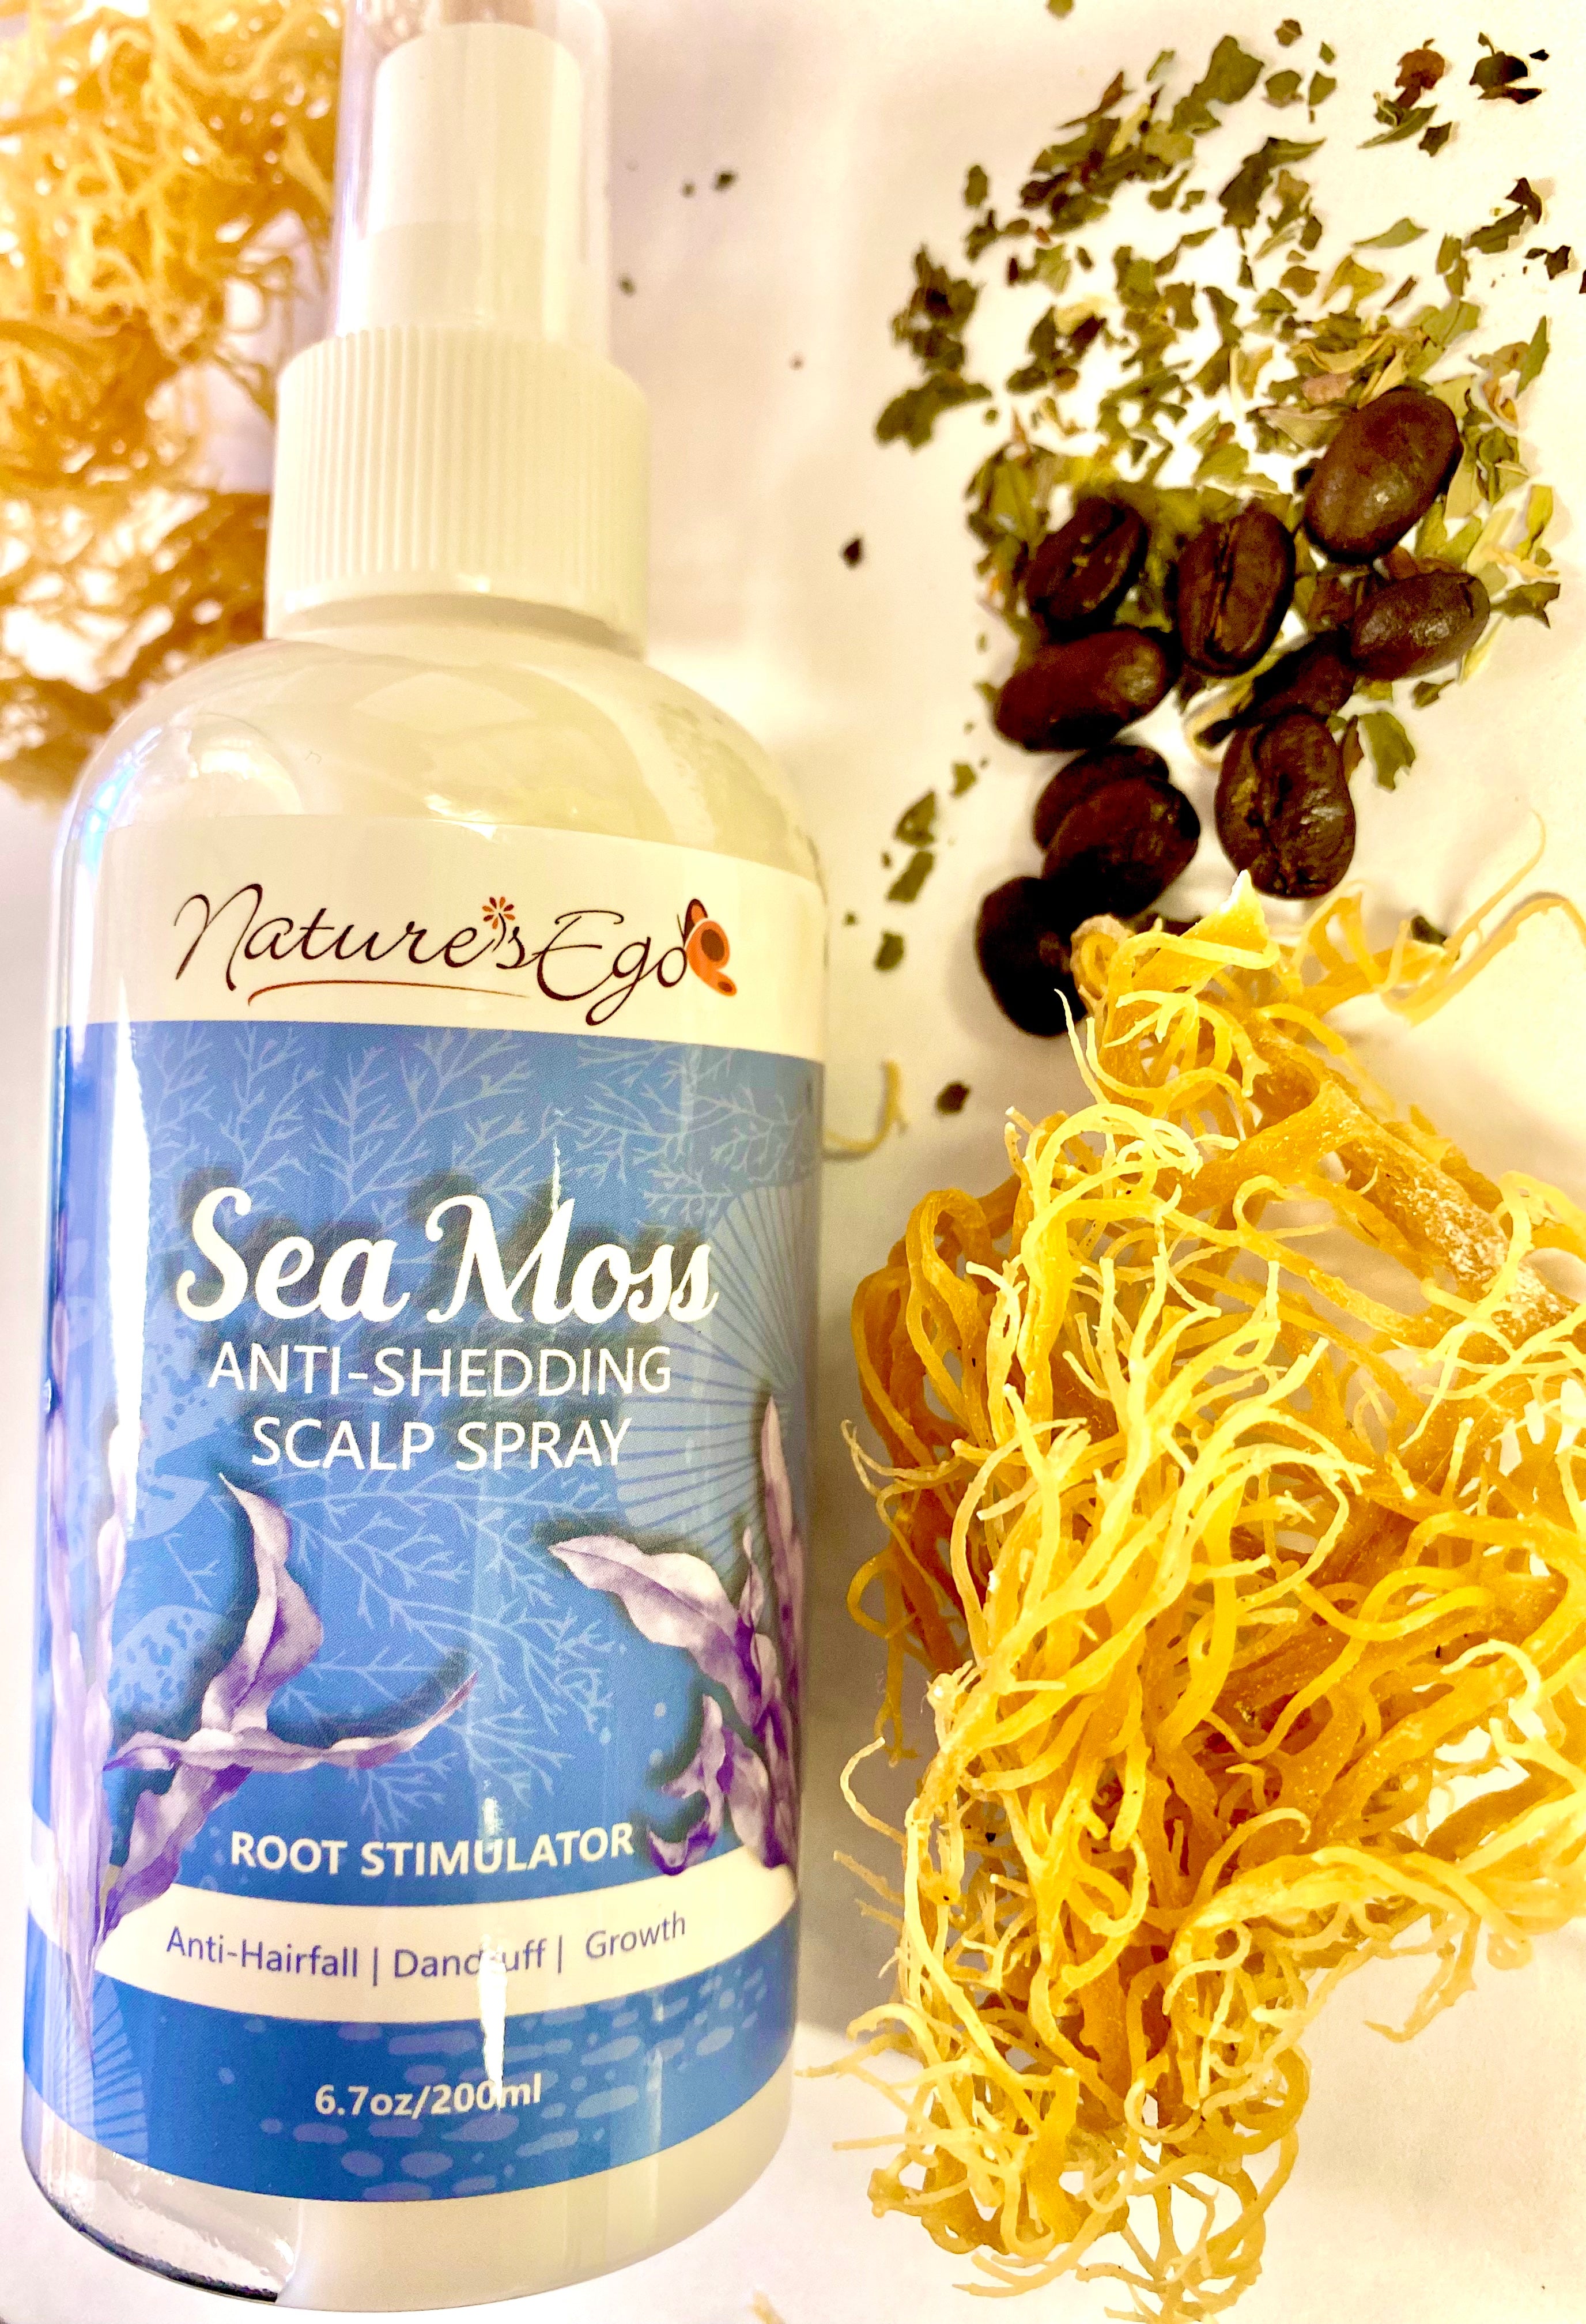 Sea Moss Scalp Spray